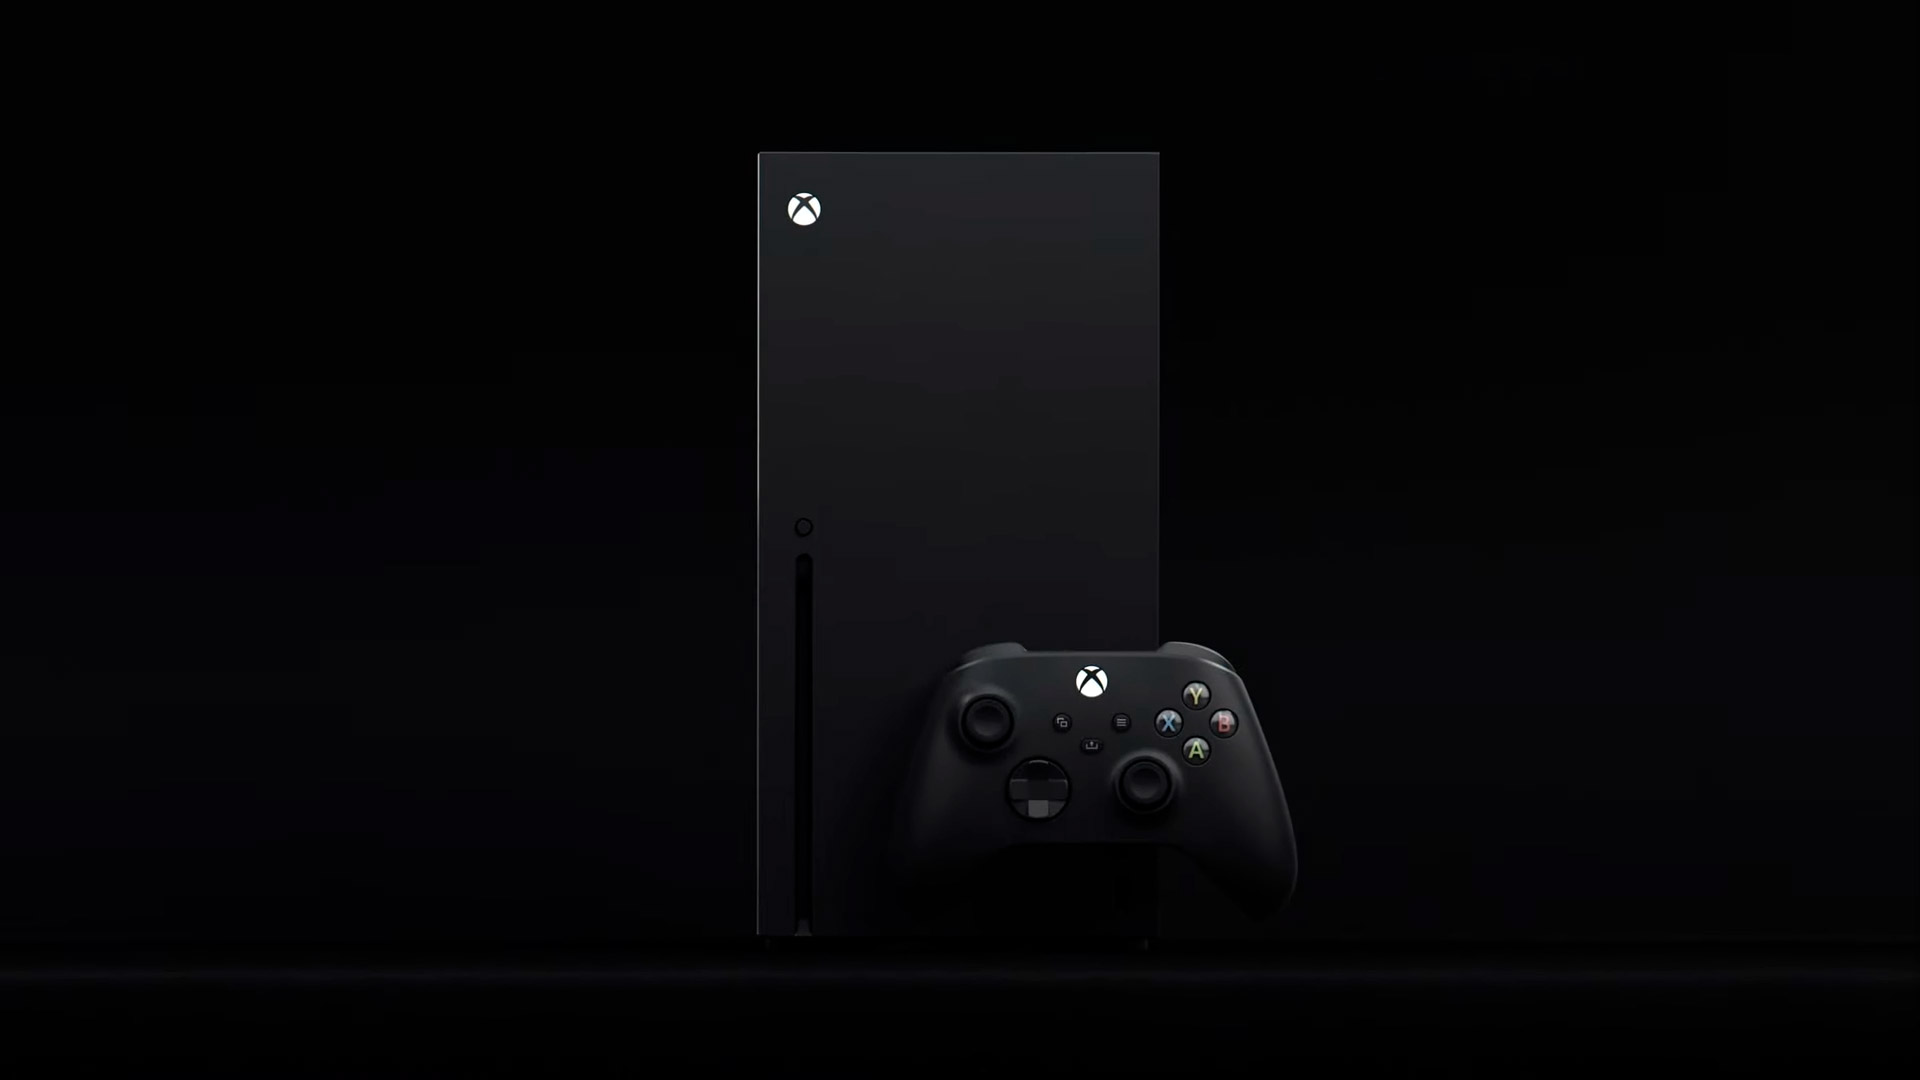 I-Xbox Series X Ukusebenza nazo zonke ii-Xbox One ezineLayisenisi ezisemthethweni